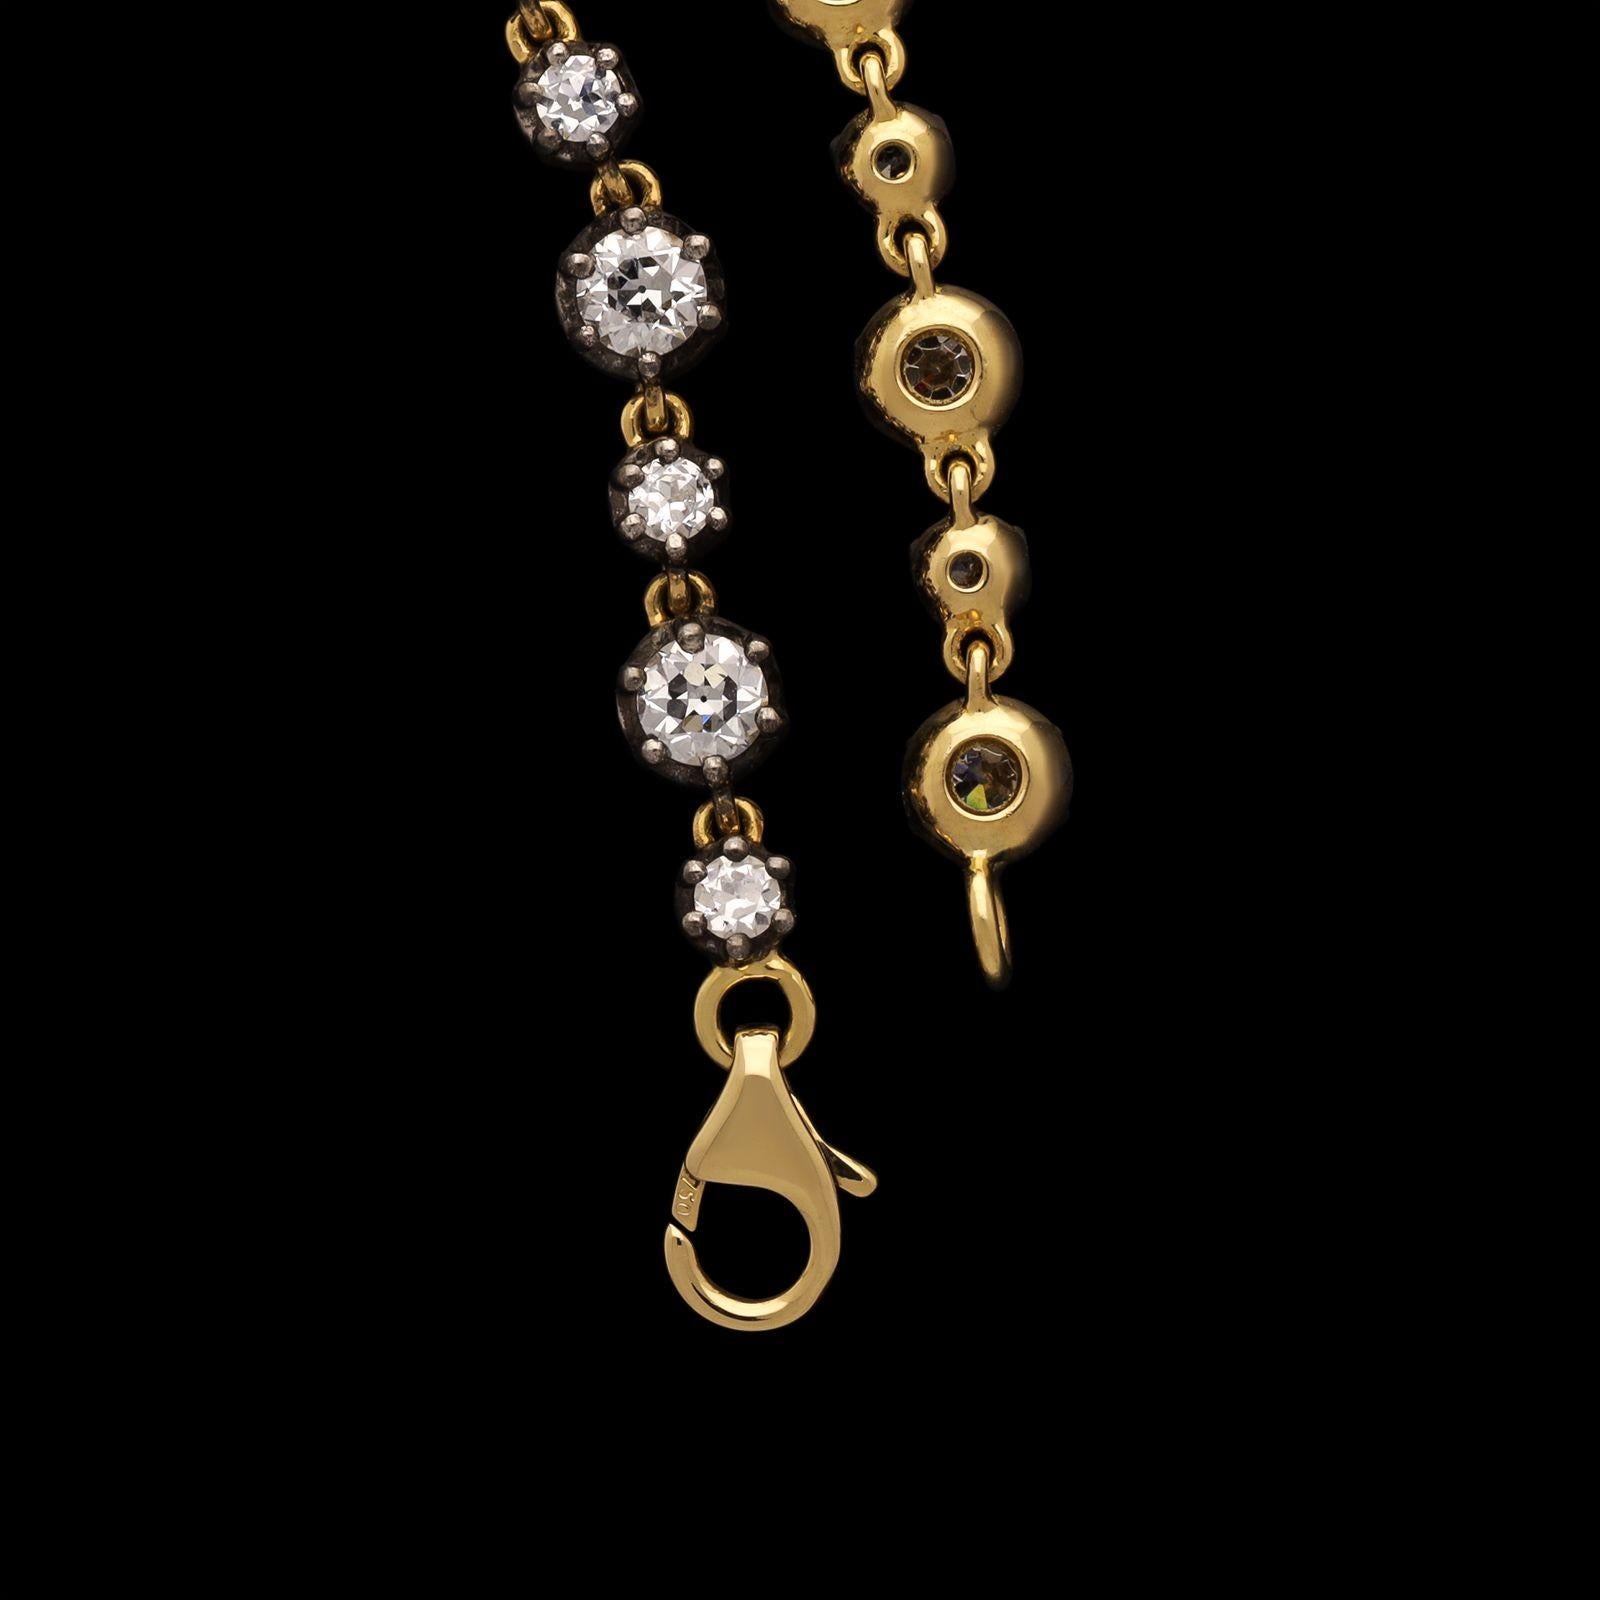 Hancocks 4ct Old European Brilliant Diamond Bracelet Platinum Gold Contemporary In New Condition For Sale In London, GB